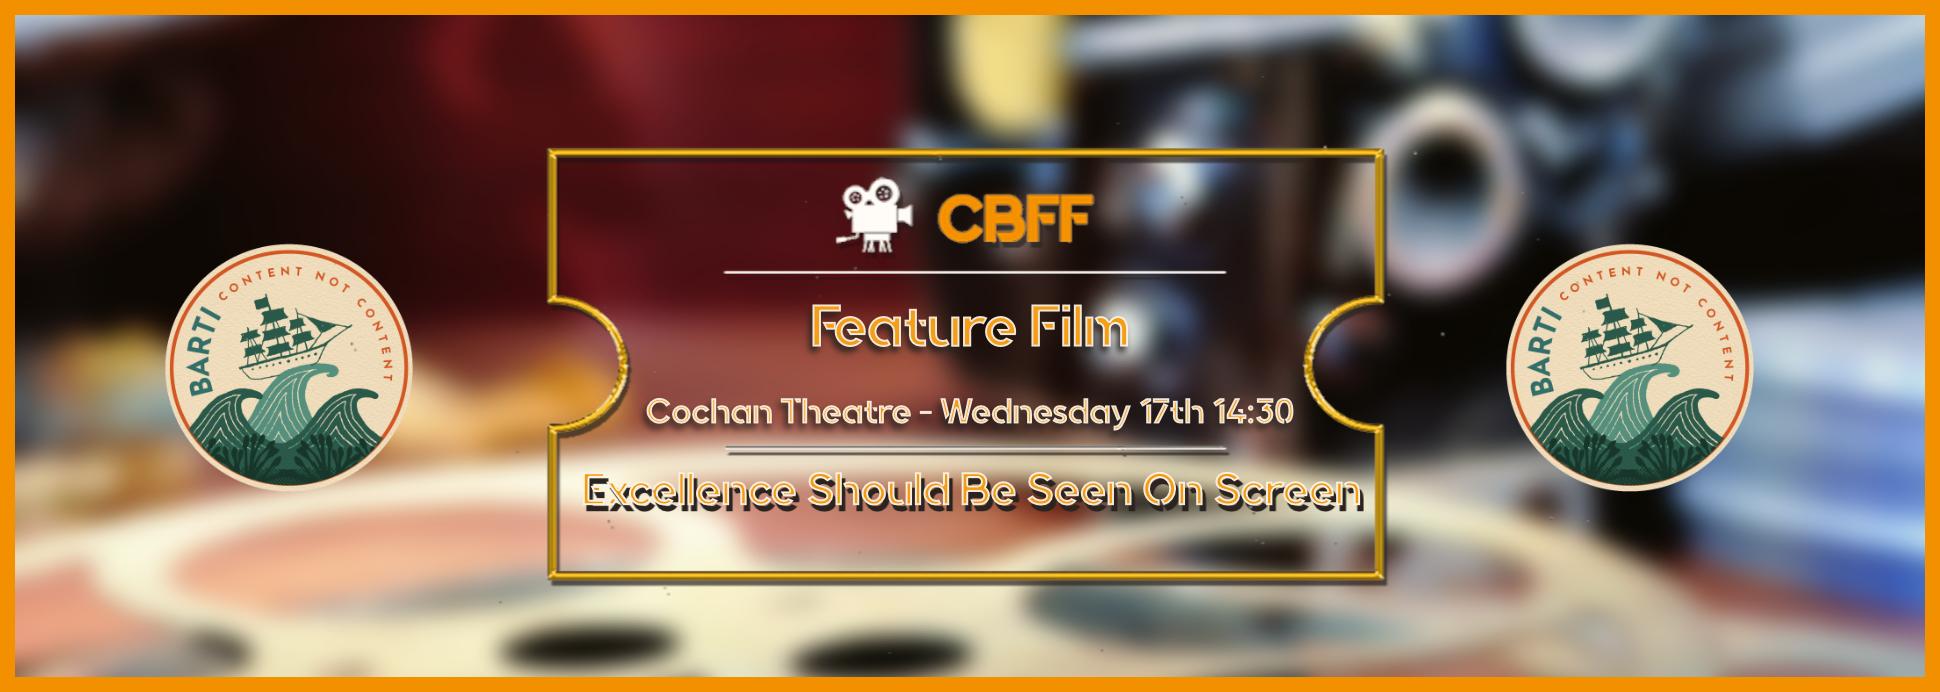 Crochan Theatre - Feature Film 17th 14:30